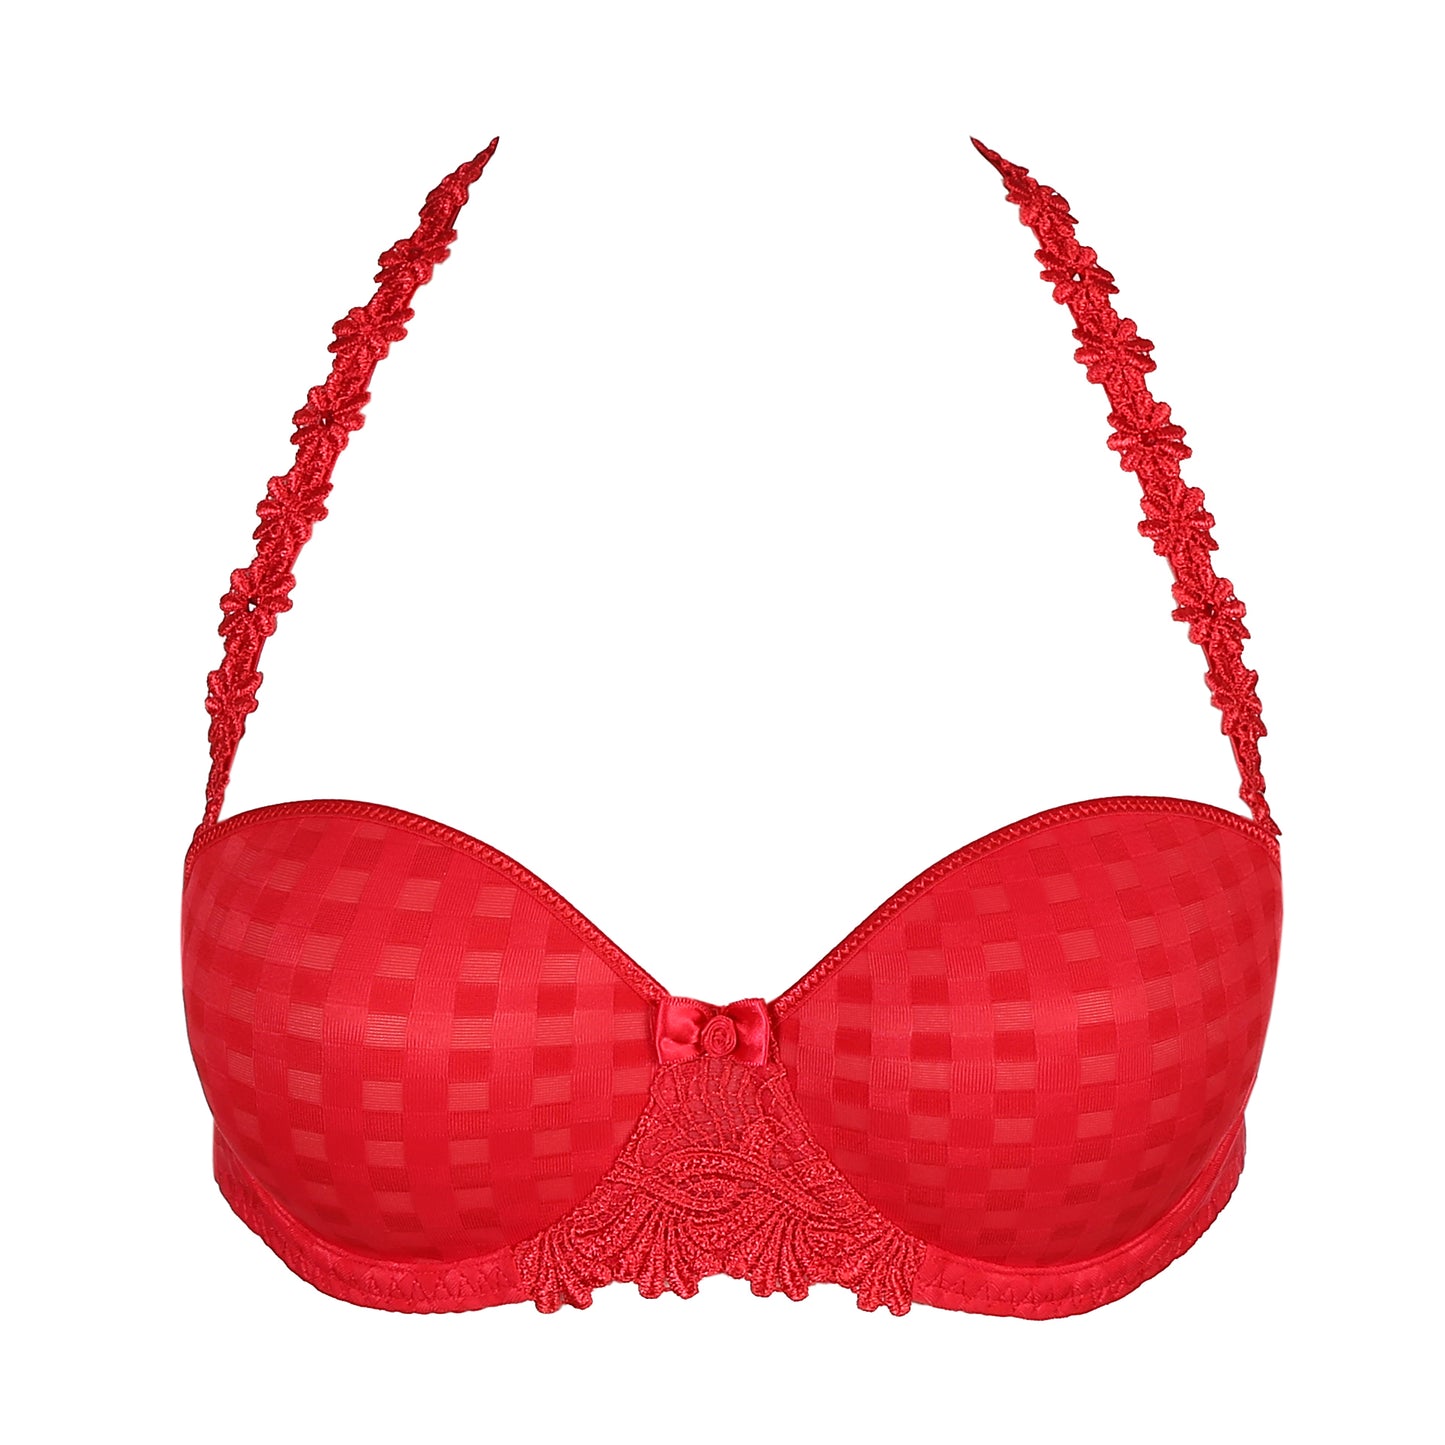 Marie Jo Avero voorgevormde bh - strapless scarlet